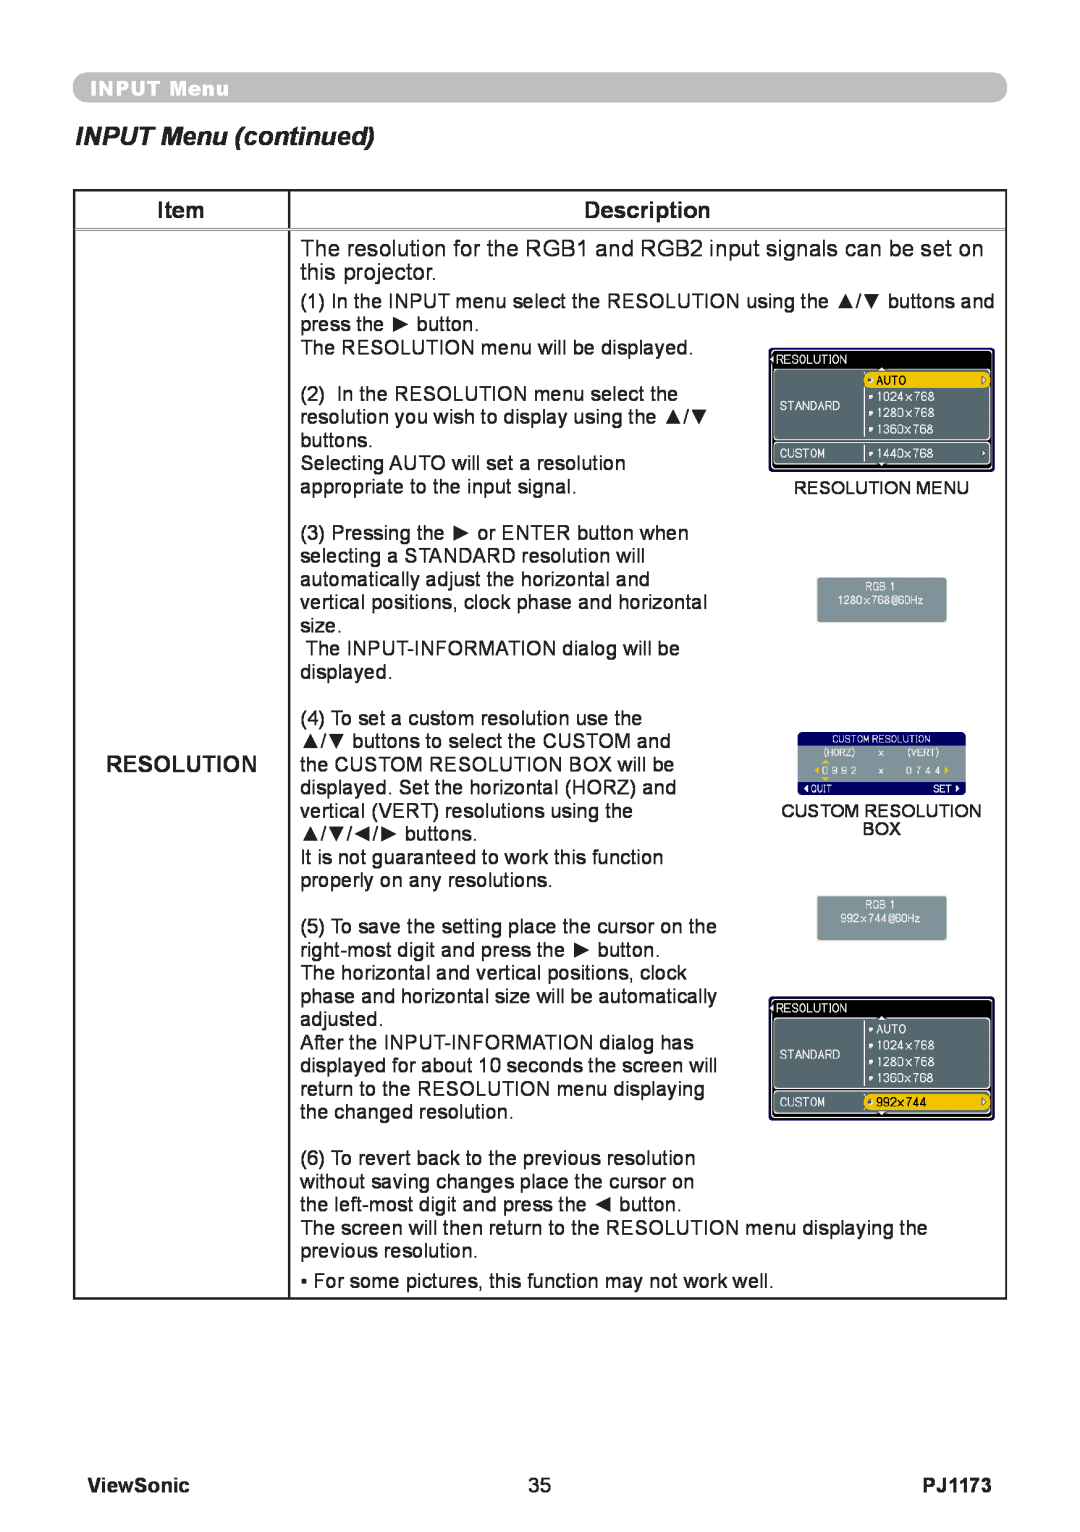 ViewSonic VS12109, PJ1173 warranty INPUT Menu continued, Item, Description, Resolution, ViewSonic 